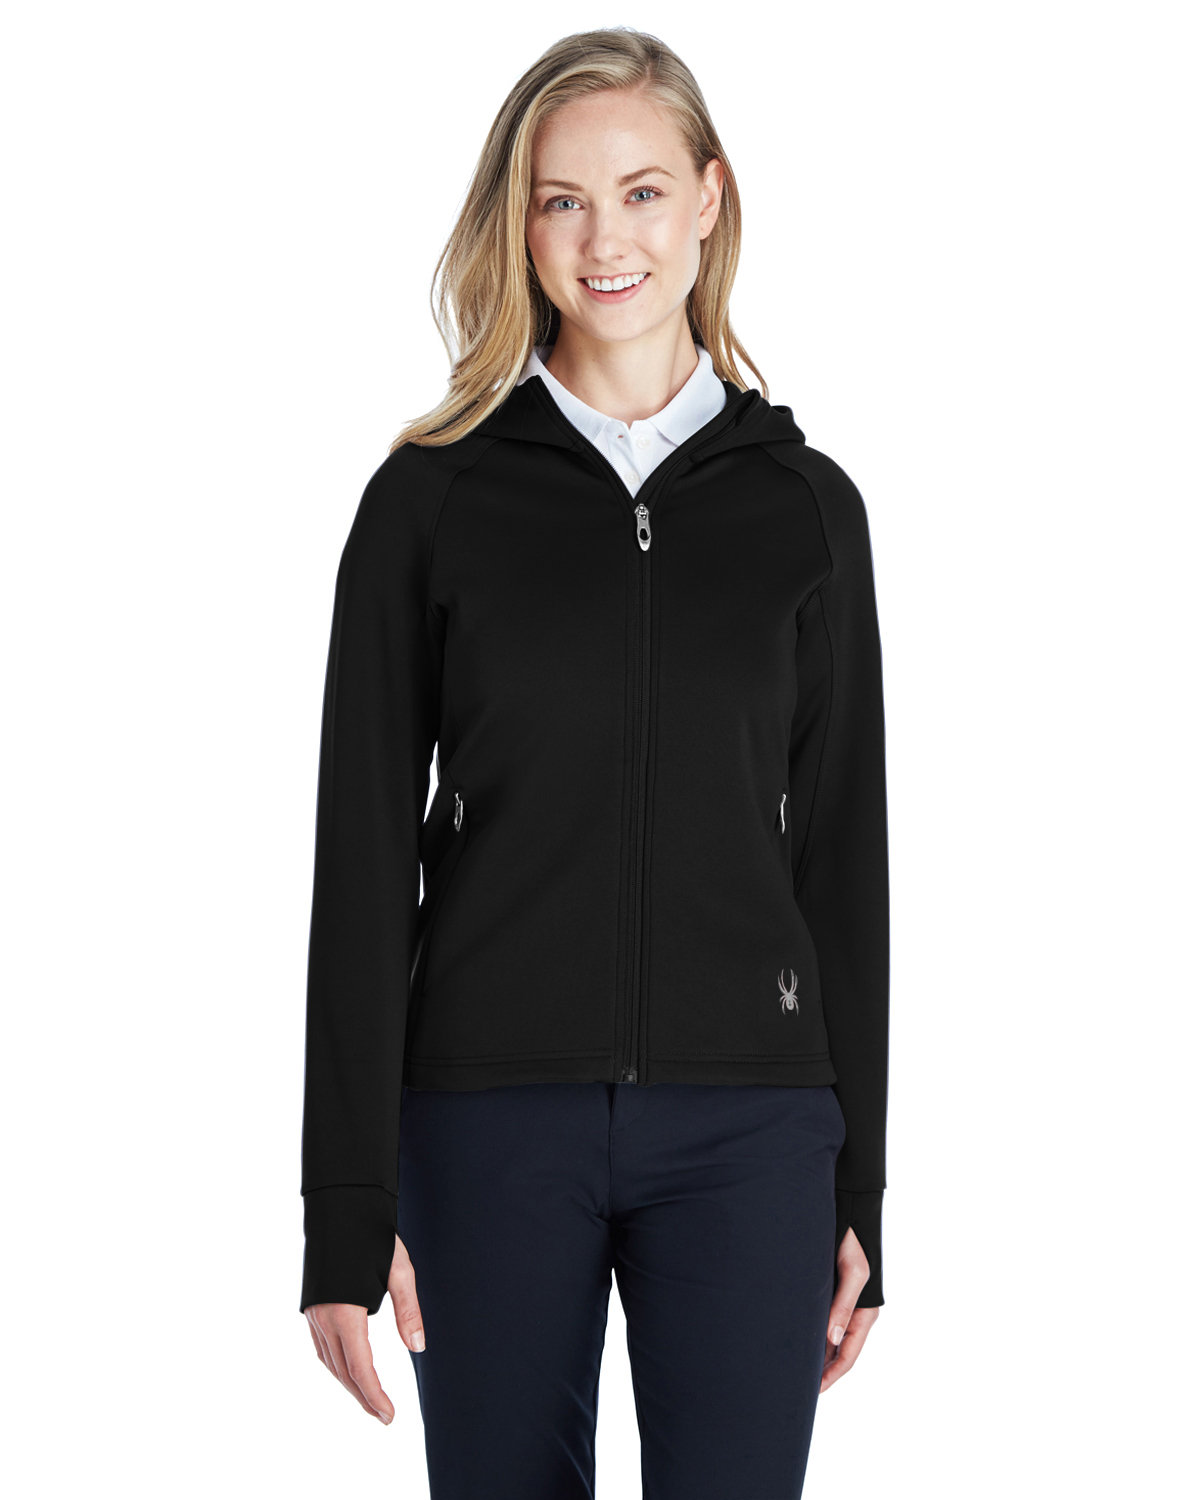 Spyder Womens Speed 1/4 Zip Fleece Jacket Black Size (Clothing) Large